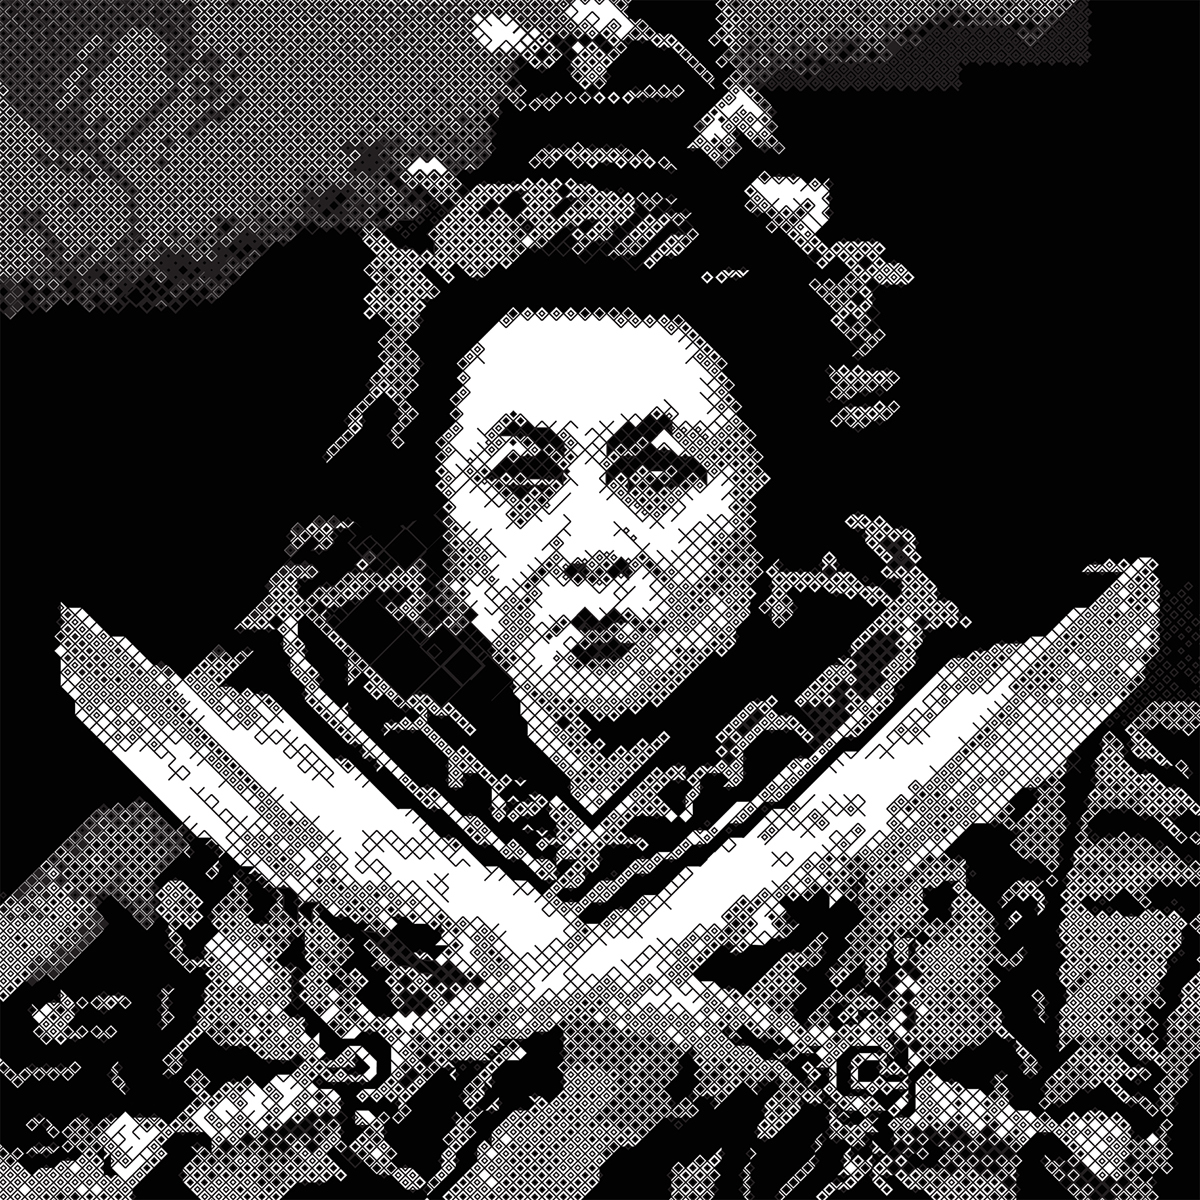 book women two faces pattern black and white raster pixel ILLUSTRATION  design orginal